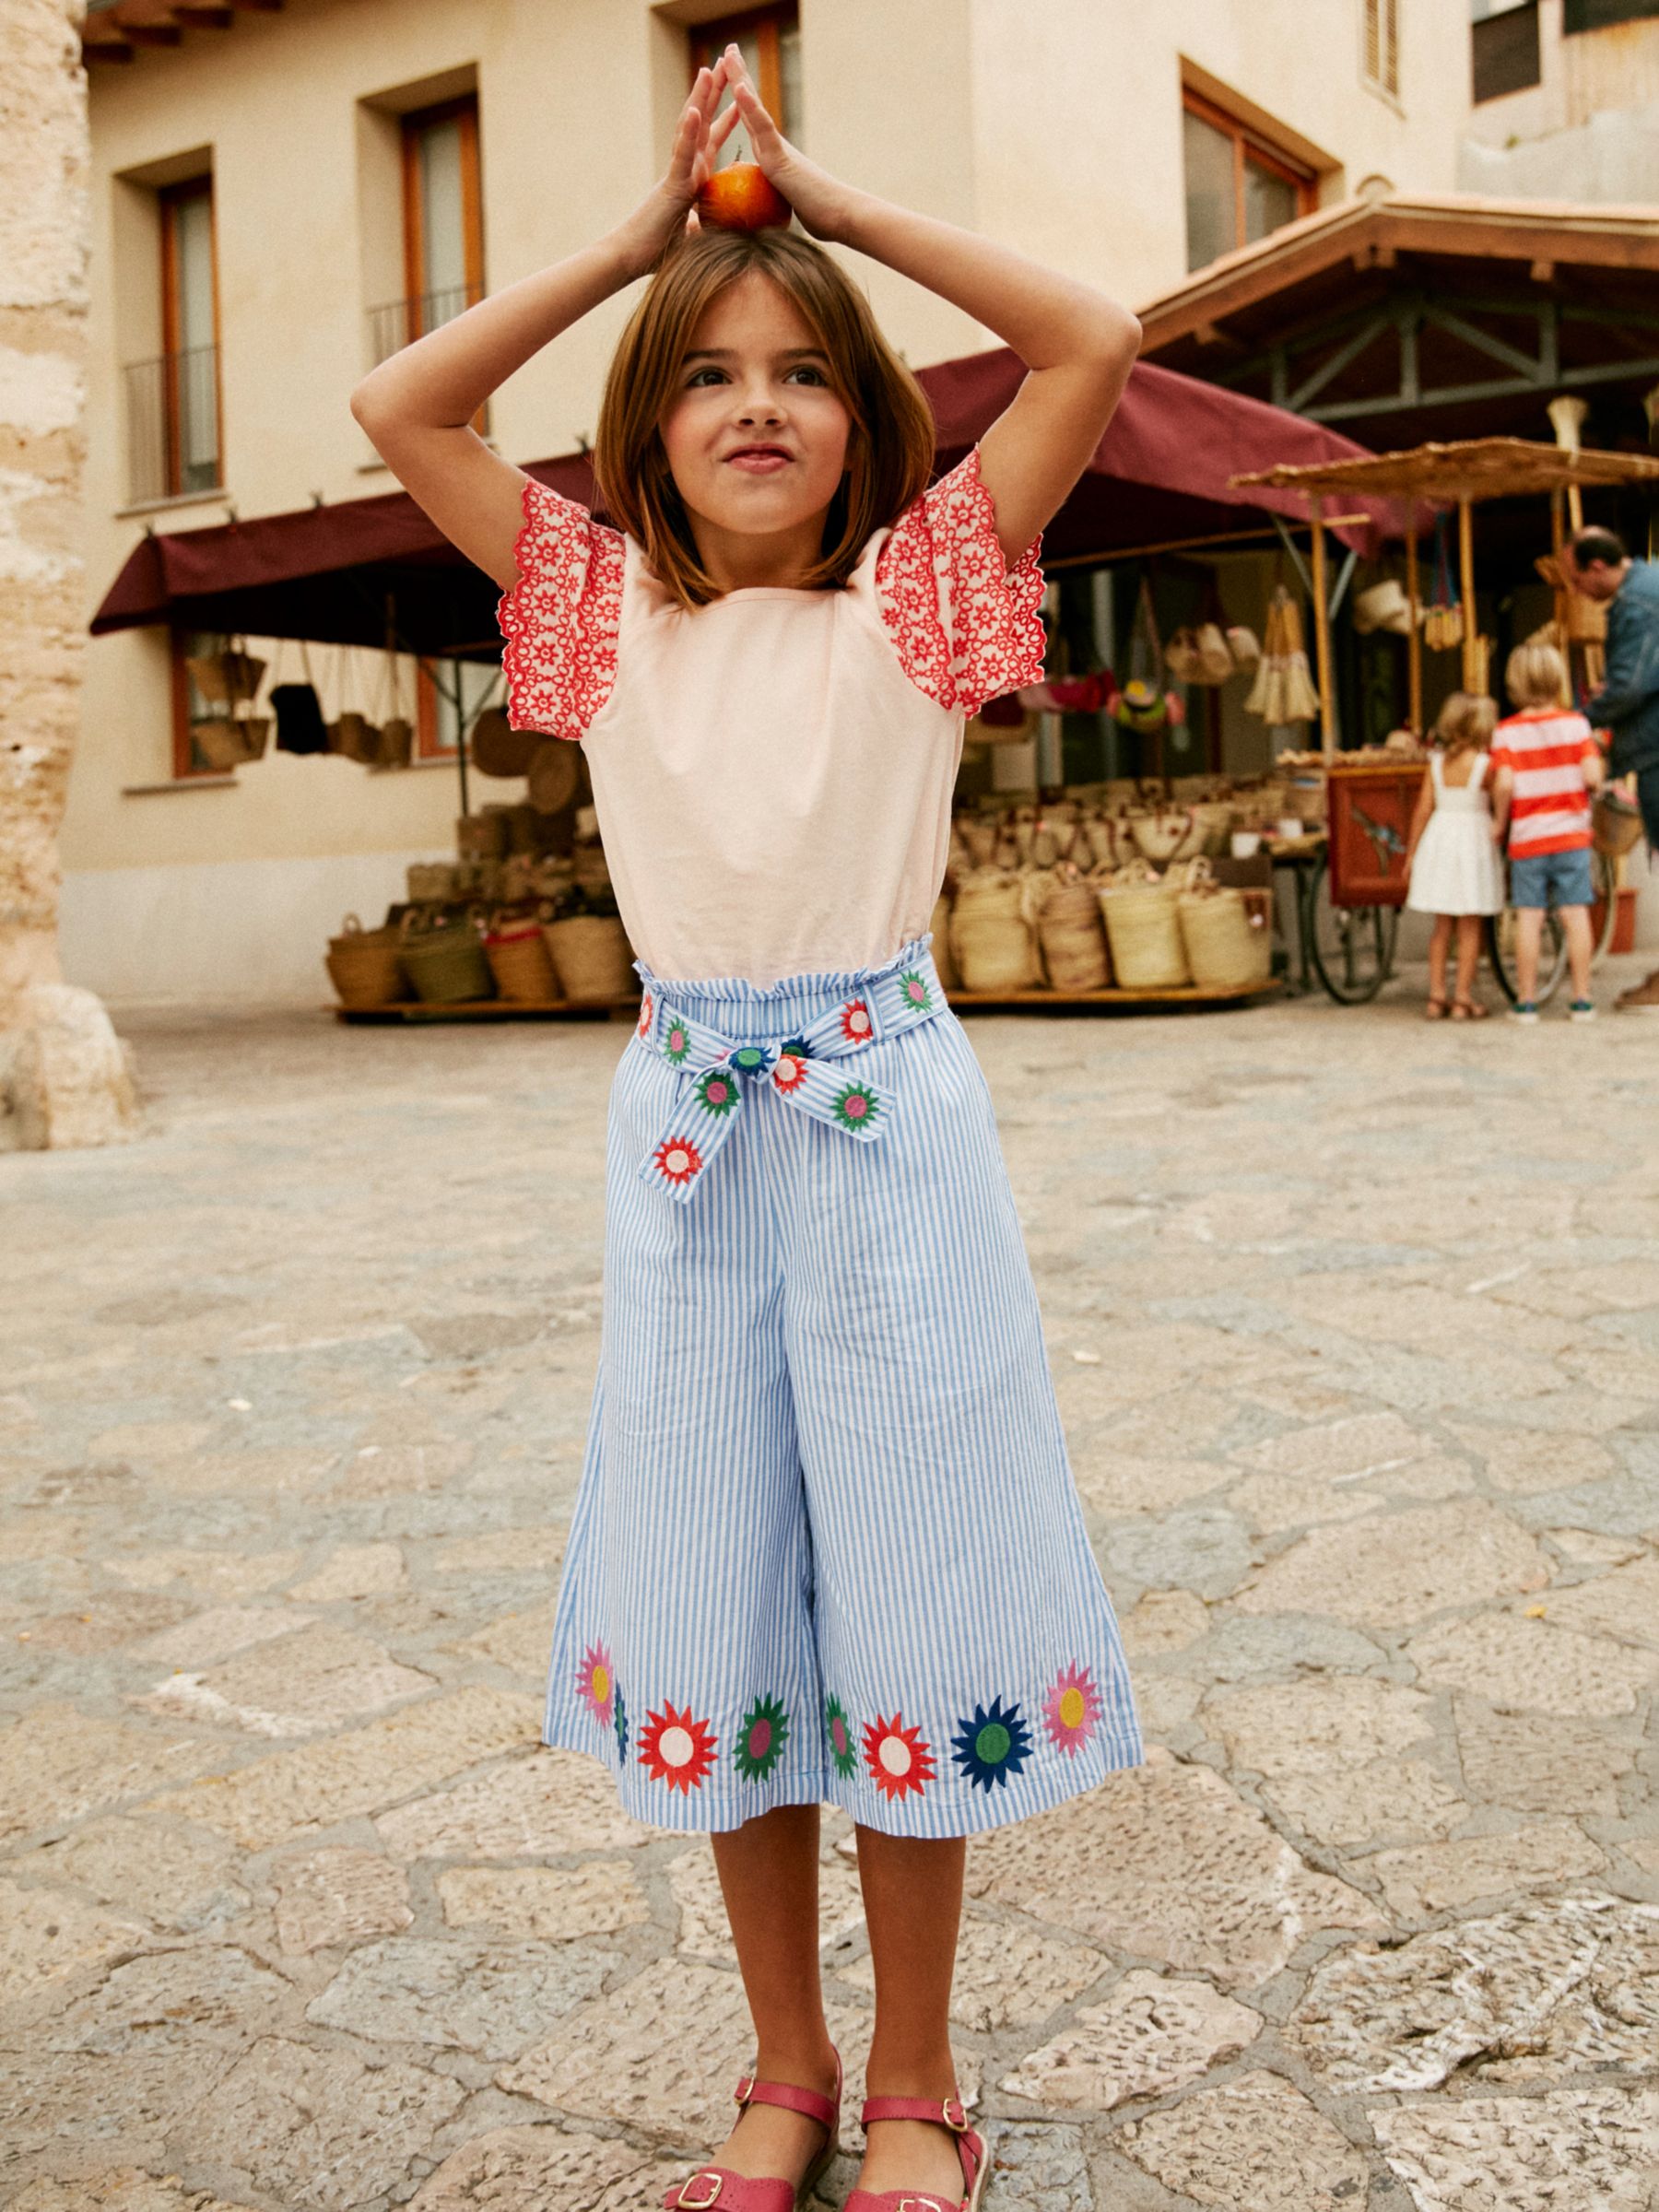 Mini Boden Kids' Floral Embroidered Stripe Wide Leg Trousers, Vintage Blue, 9Y